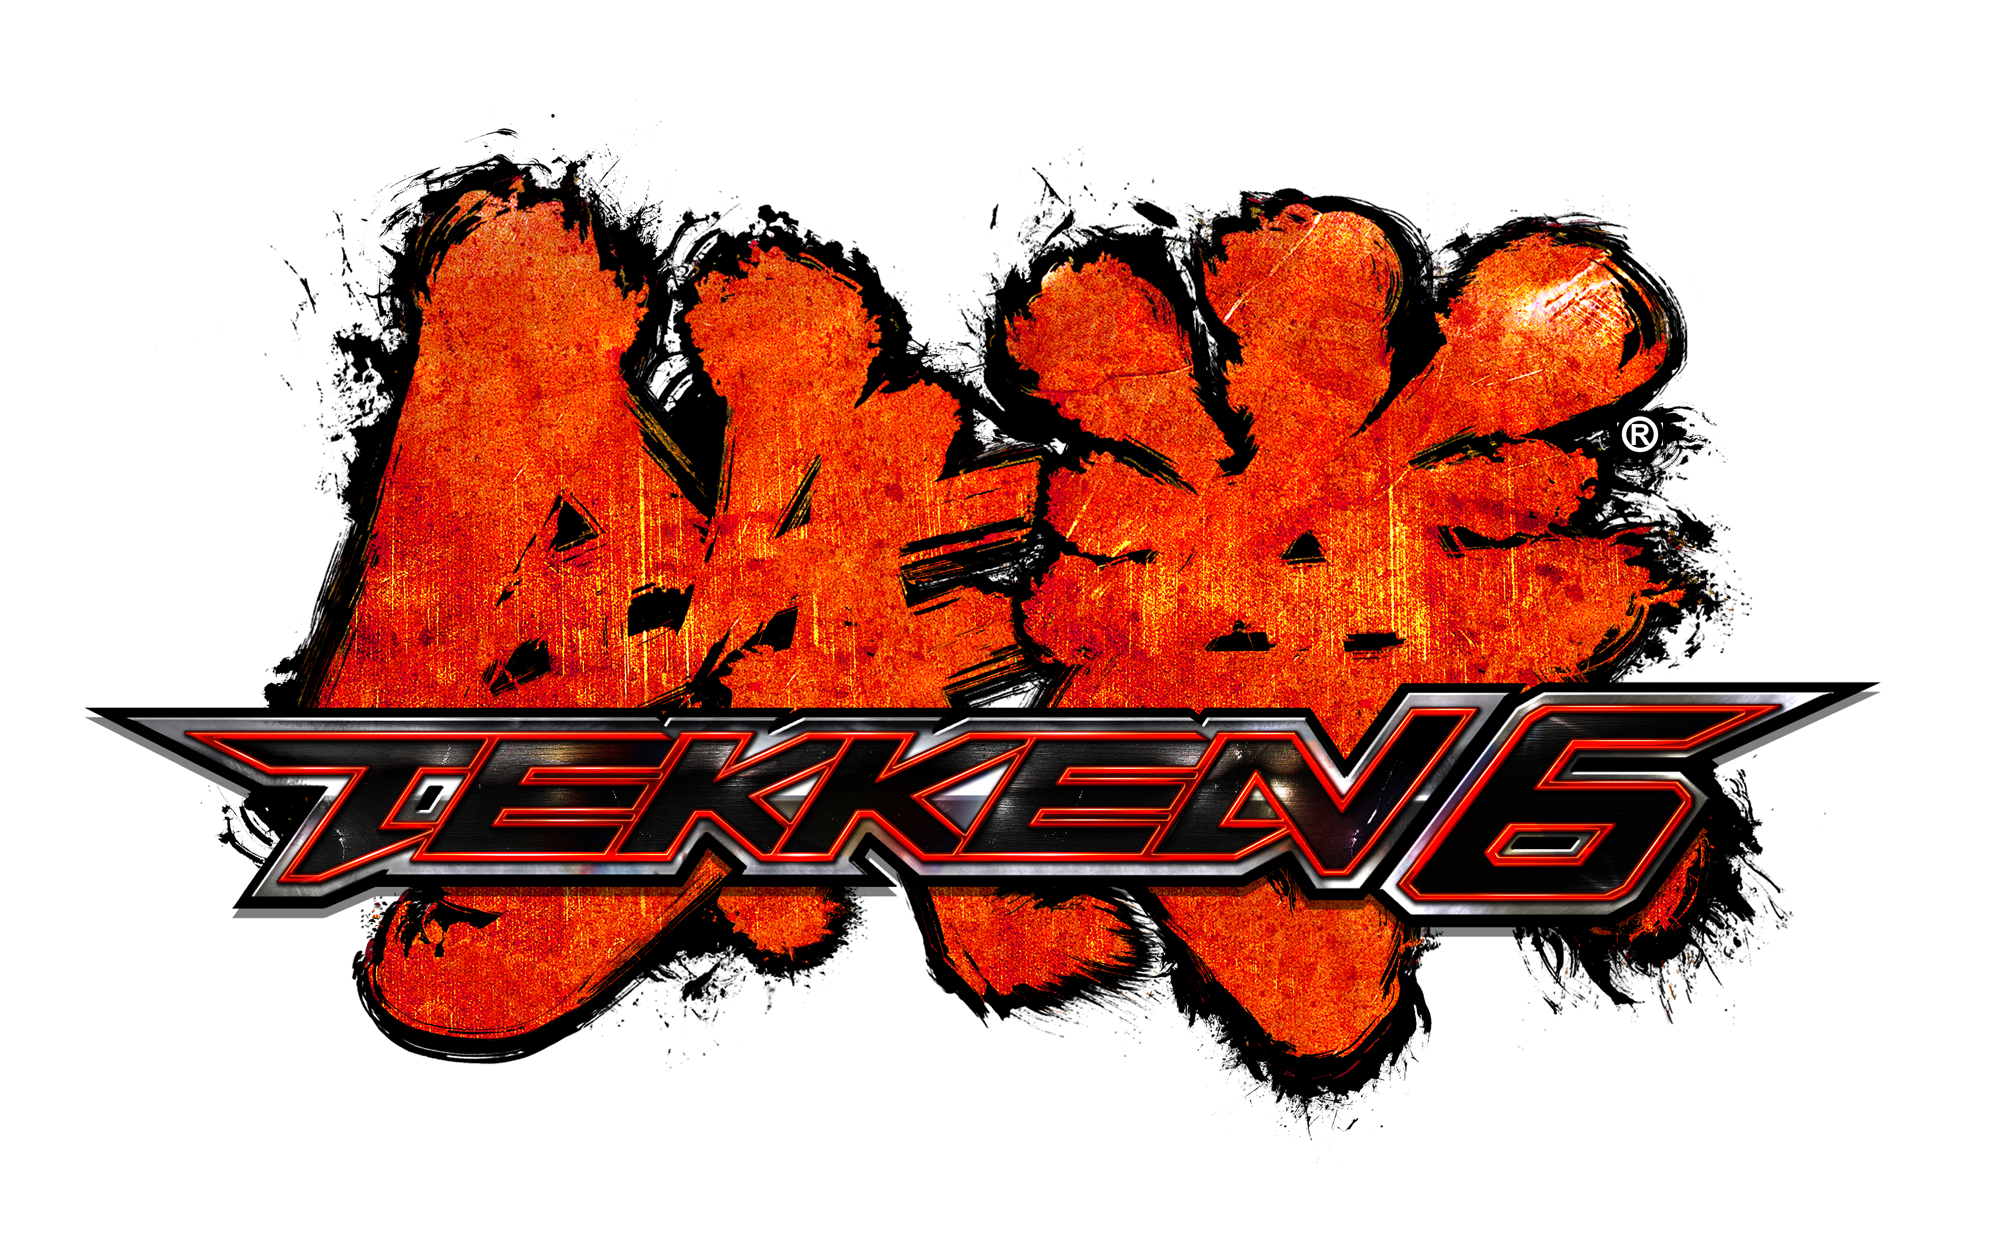 2000x1250 Tekken 6 screenshots, images and pictures Giant Bomb